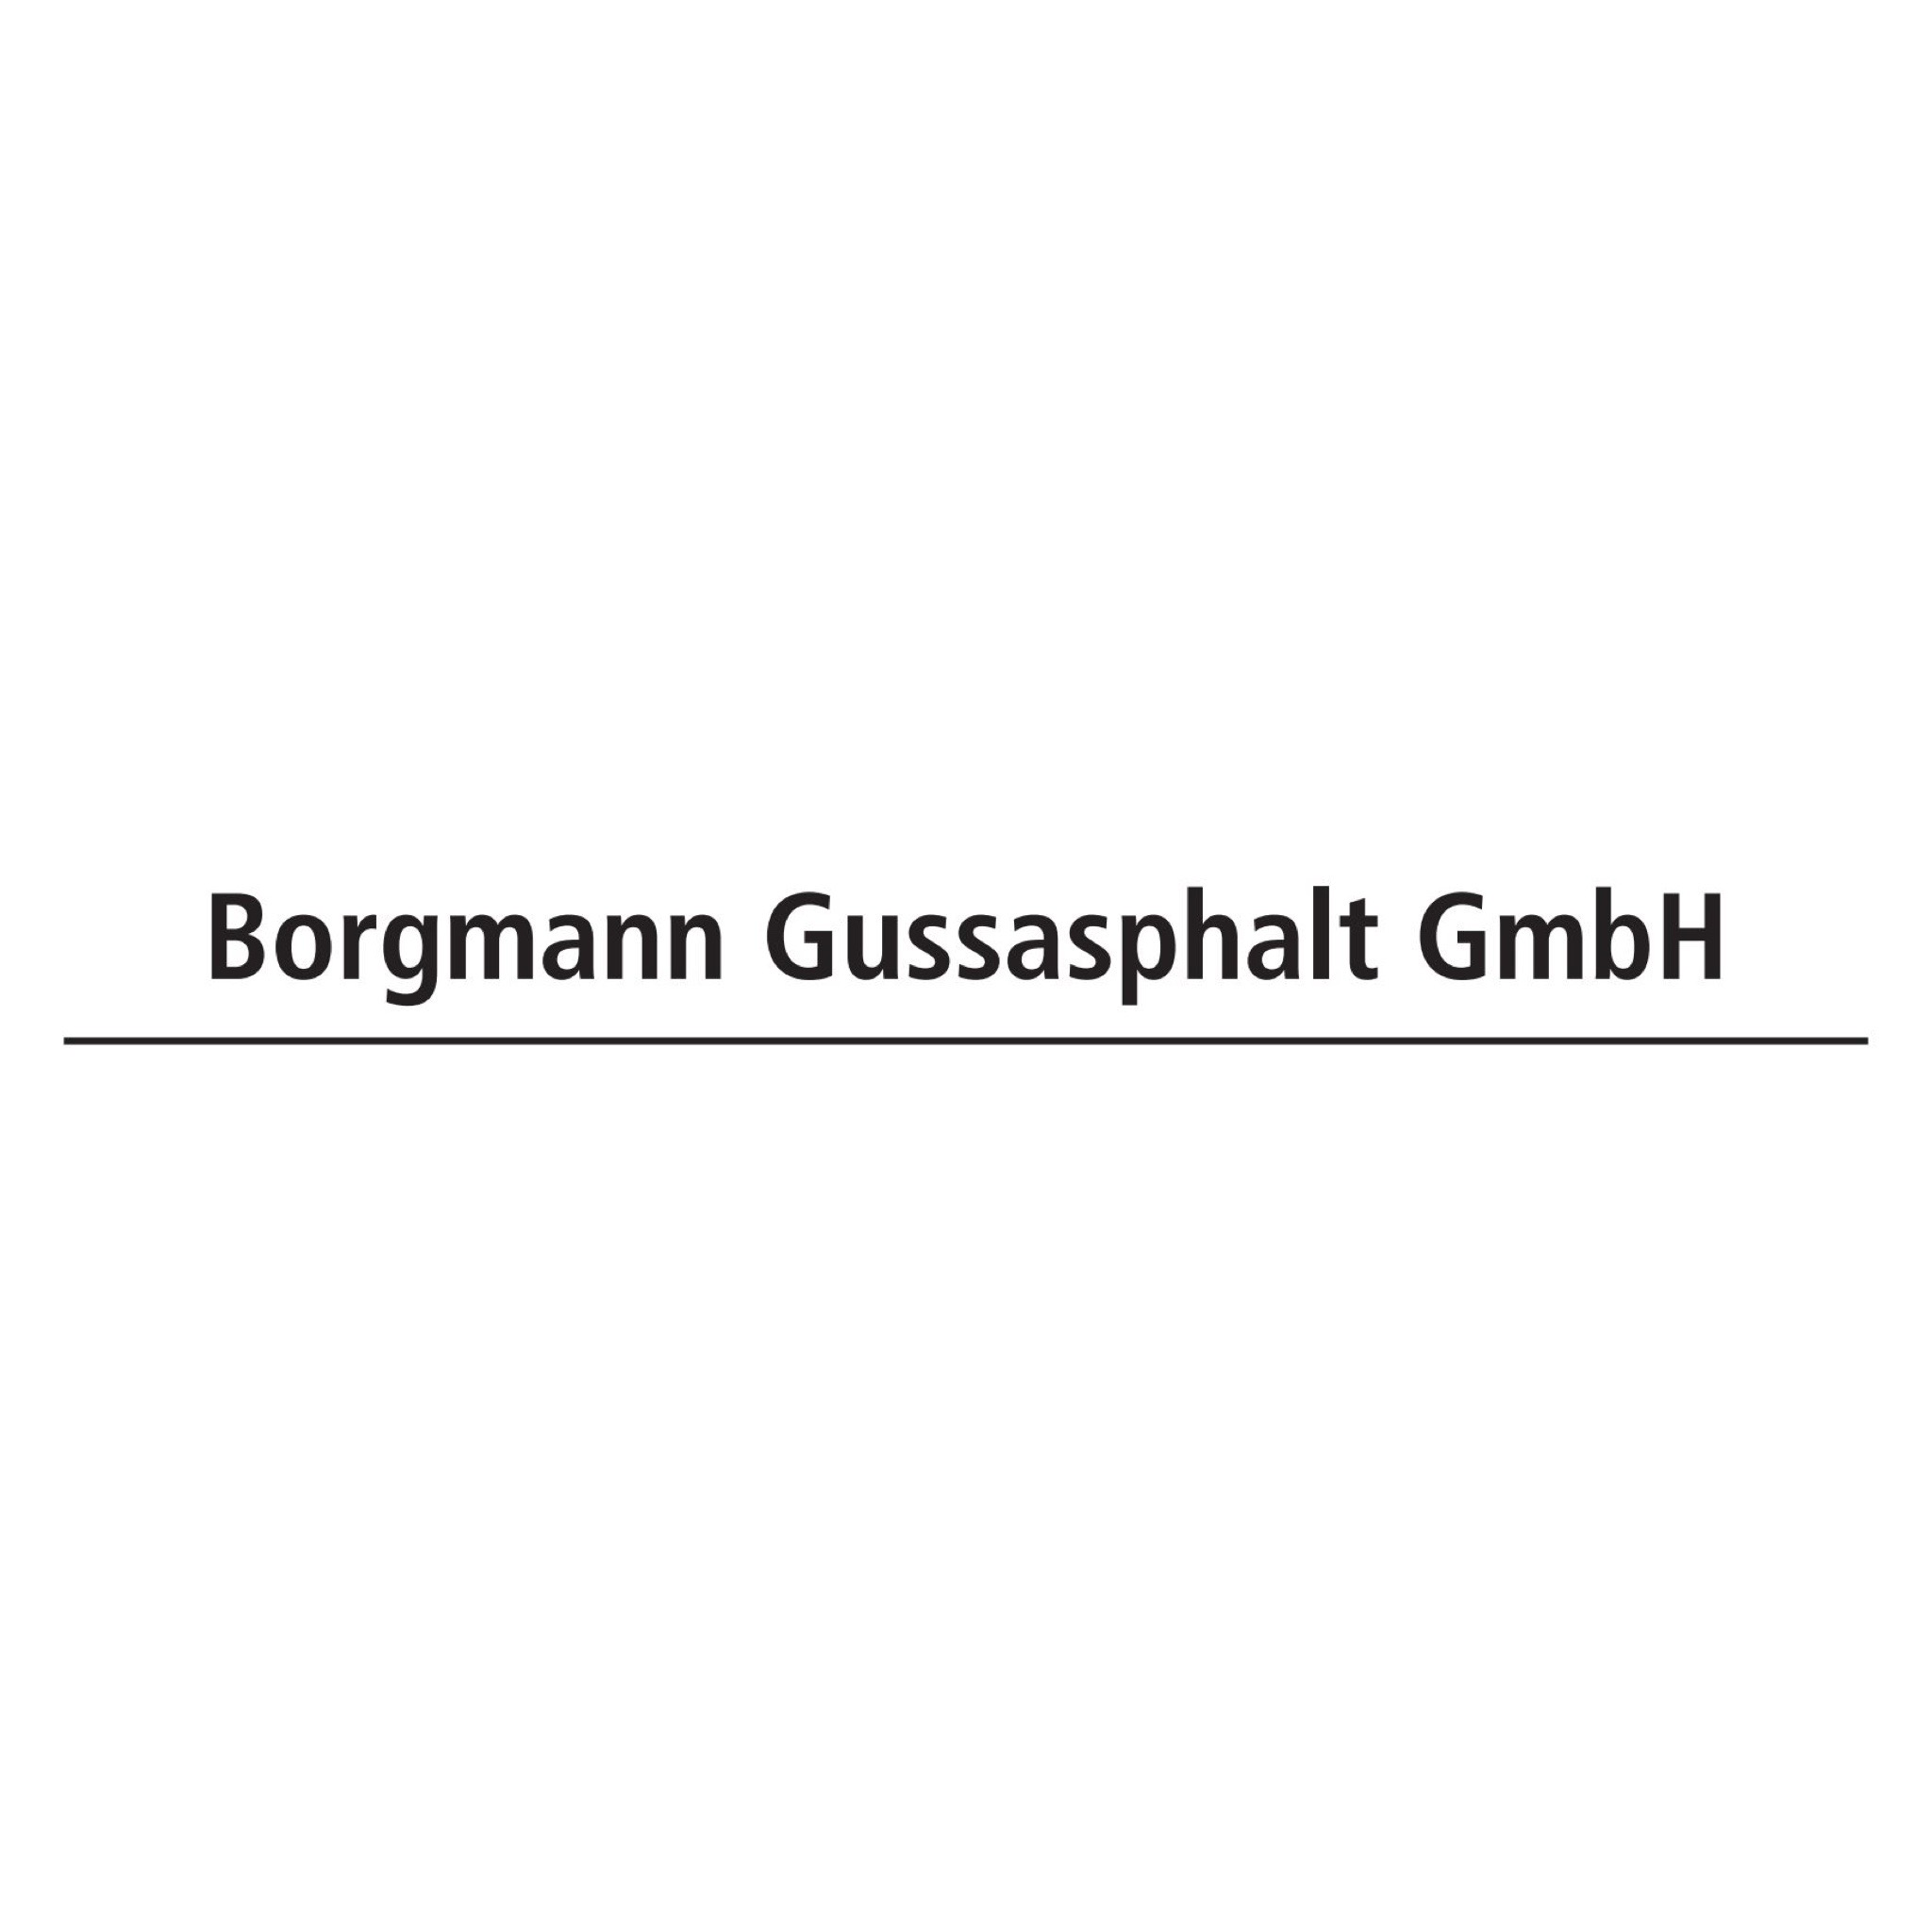 Borgmann Gussasphalt GmbH